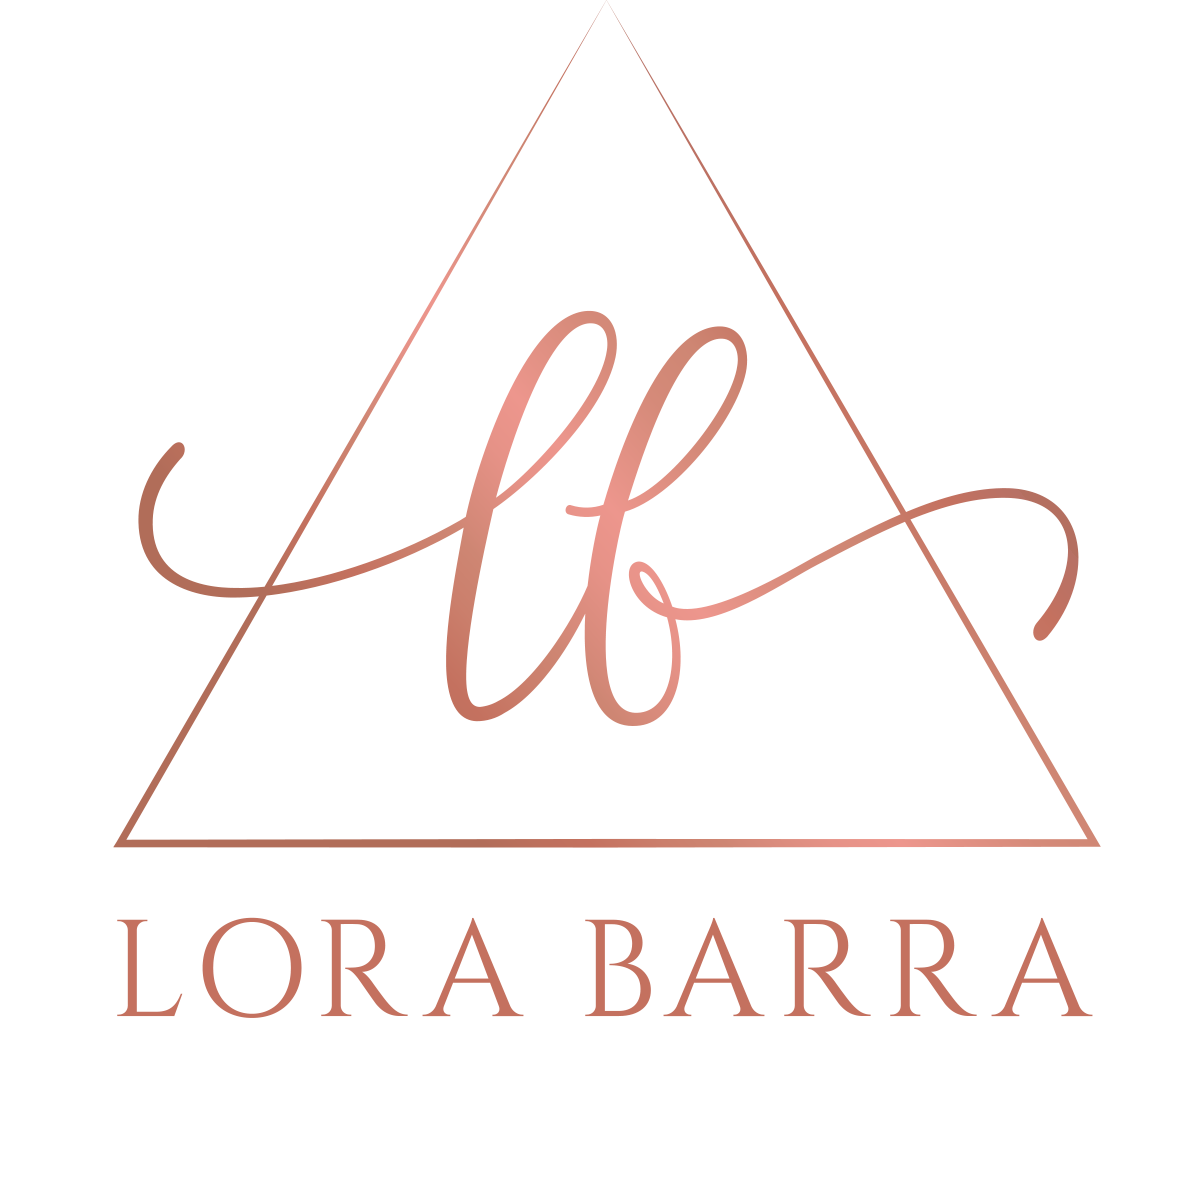 Lora Barra